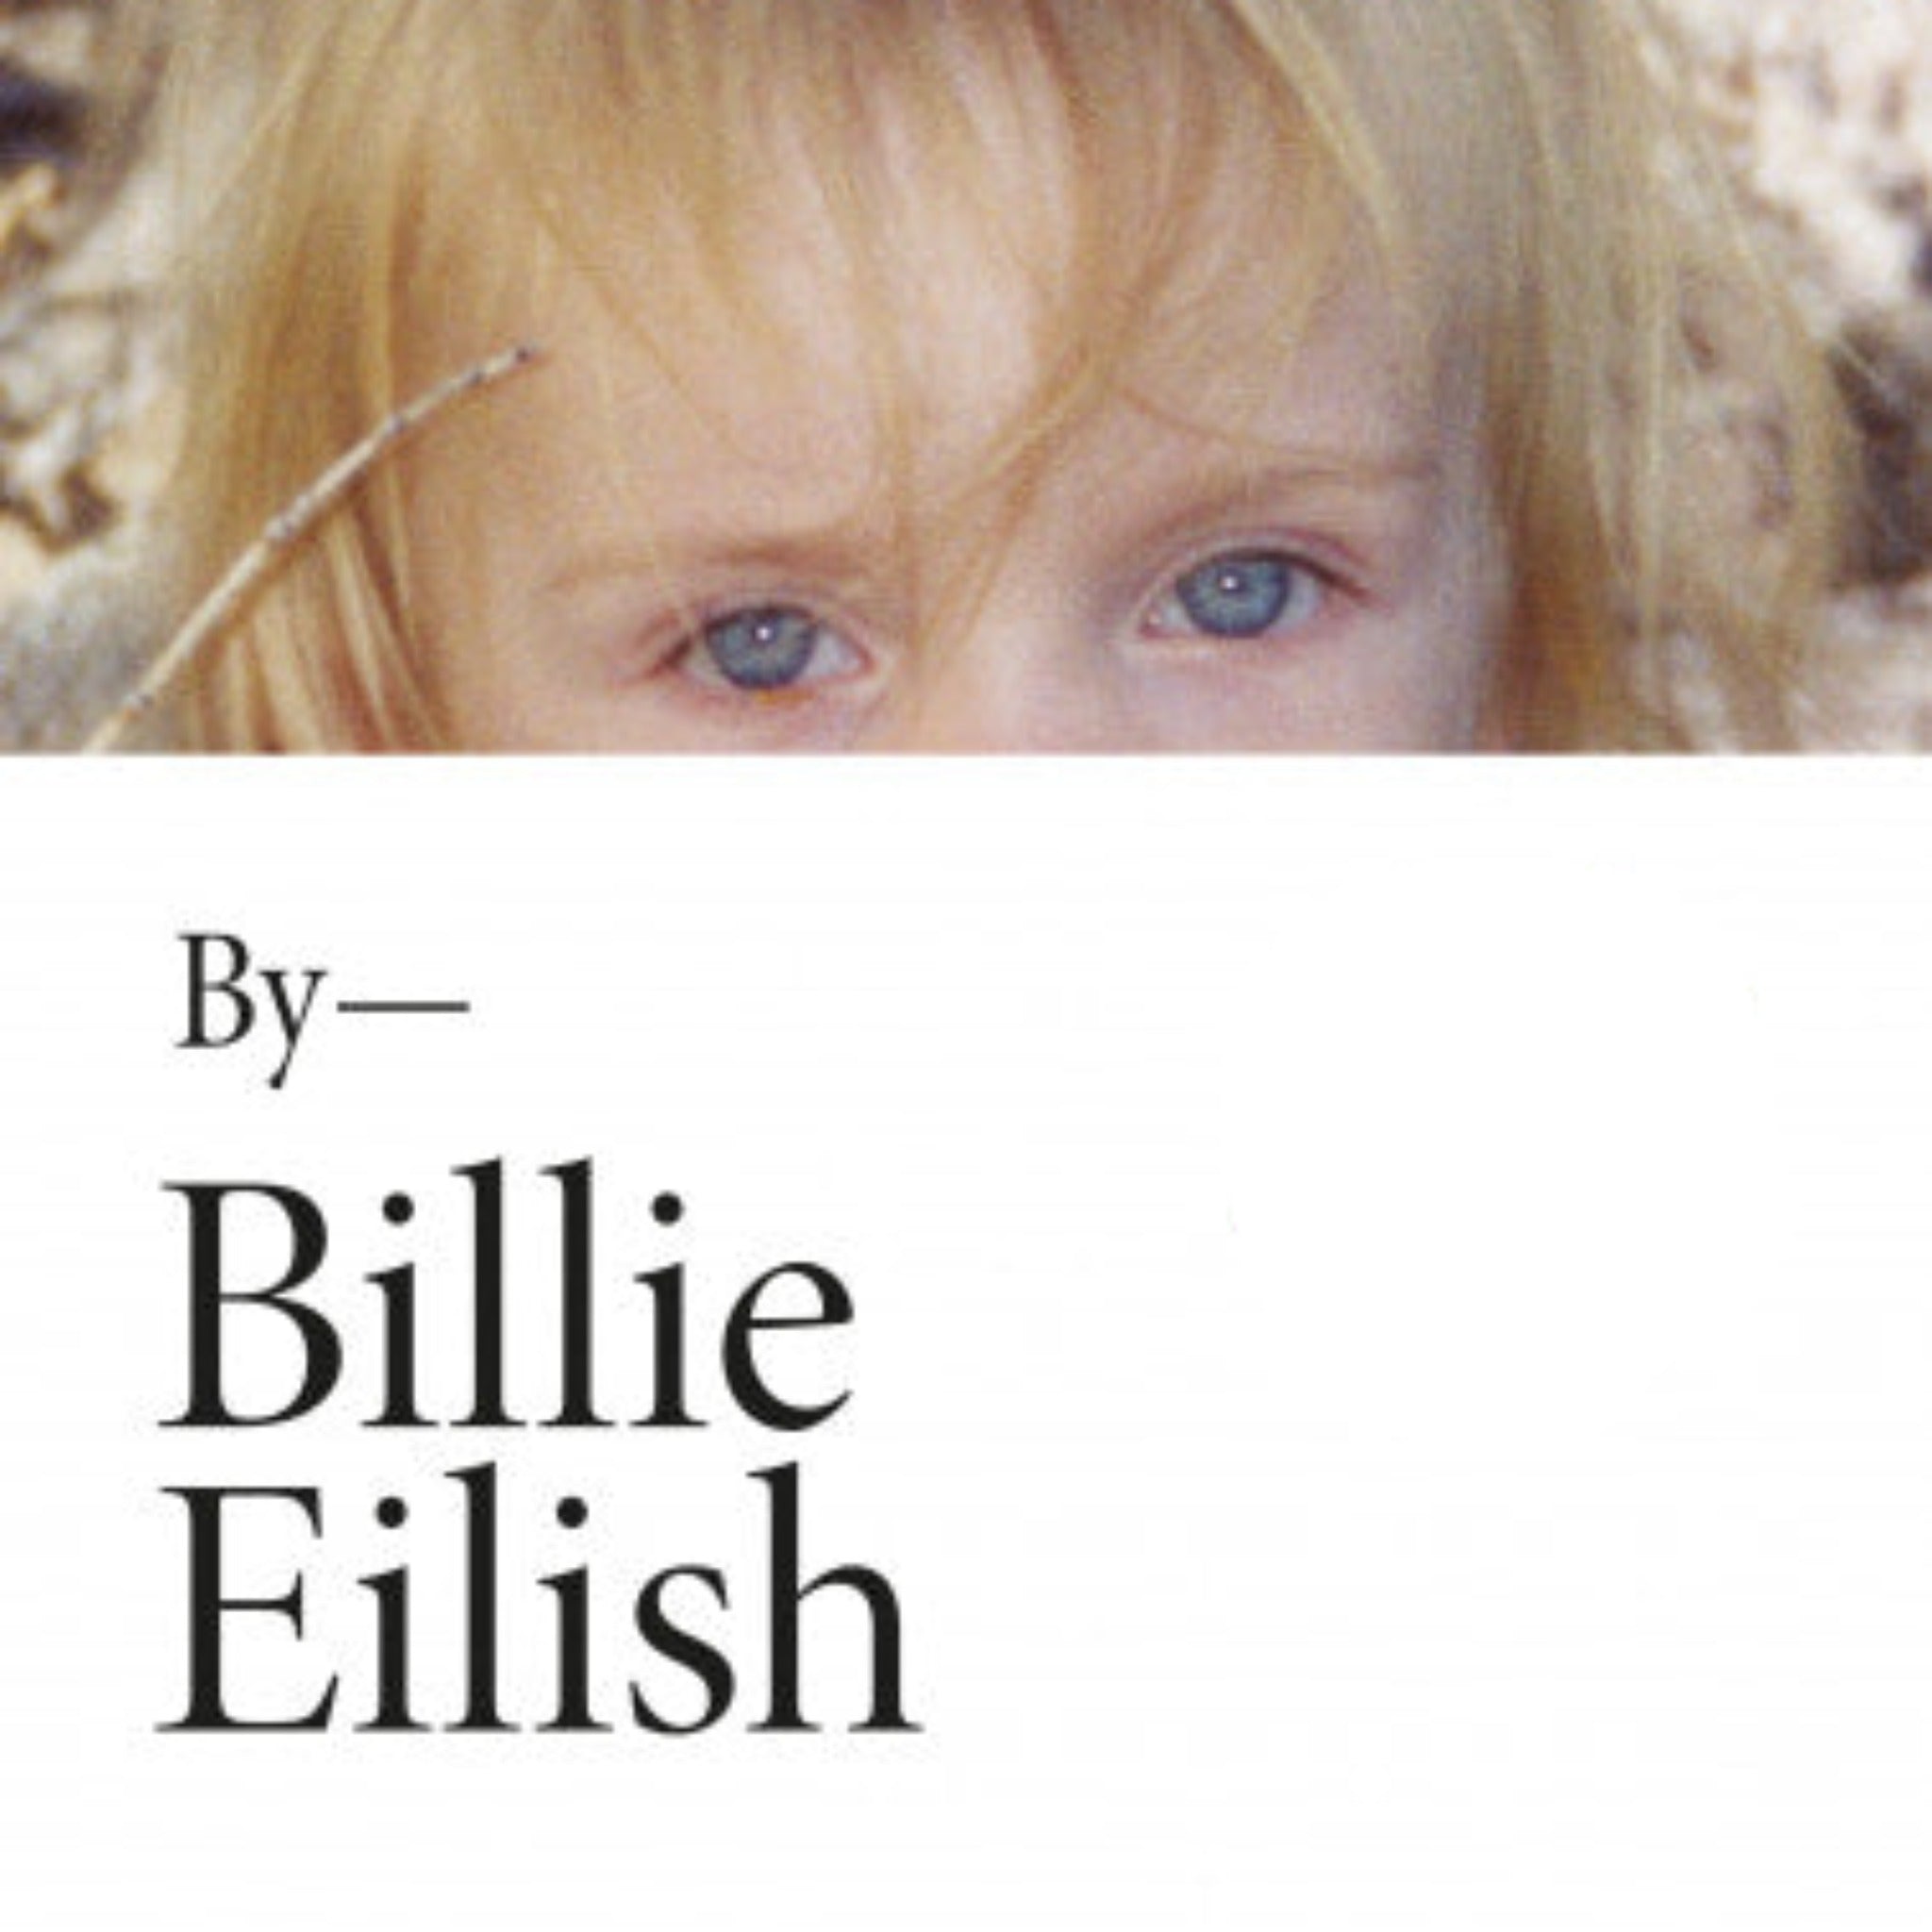 BY BILLIE EILISH